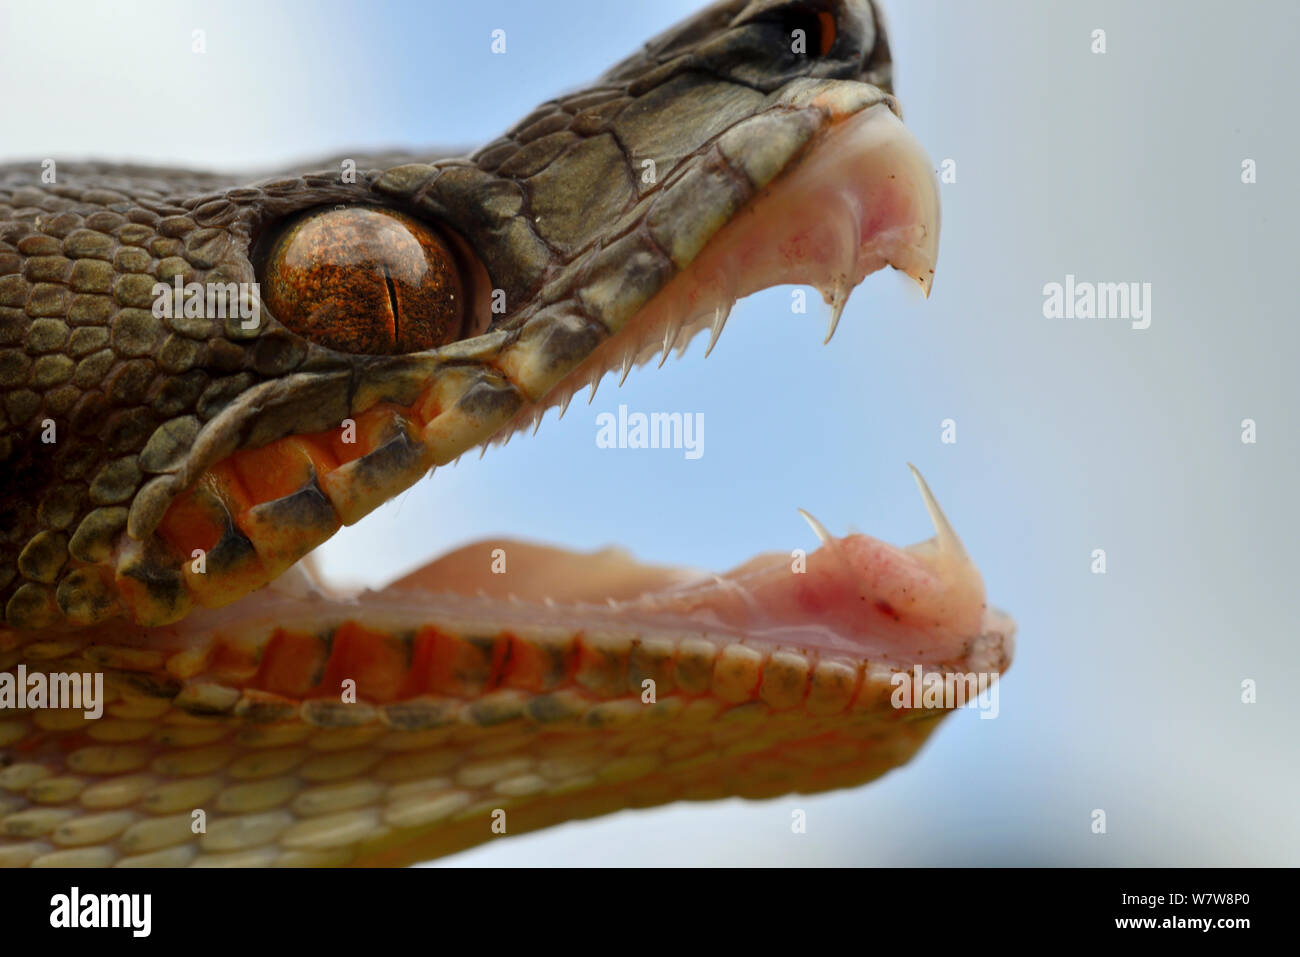 Boidae Reptile South America Stockfotos Und Bilder Kaufen Seite 2 Alamy